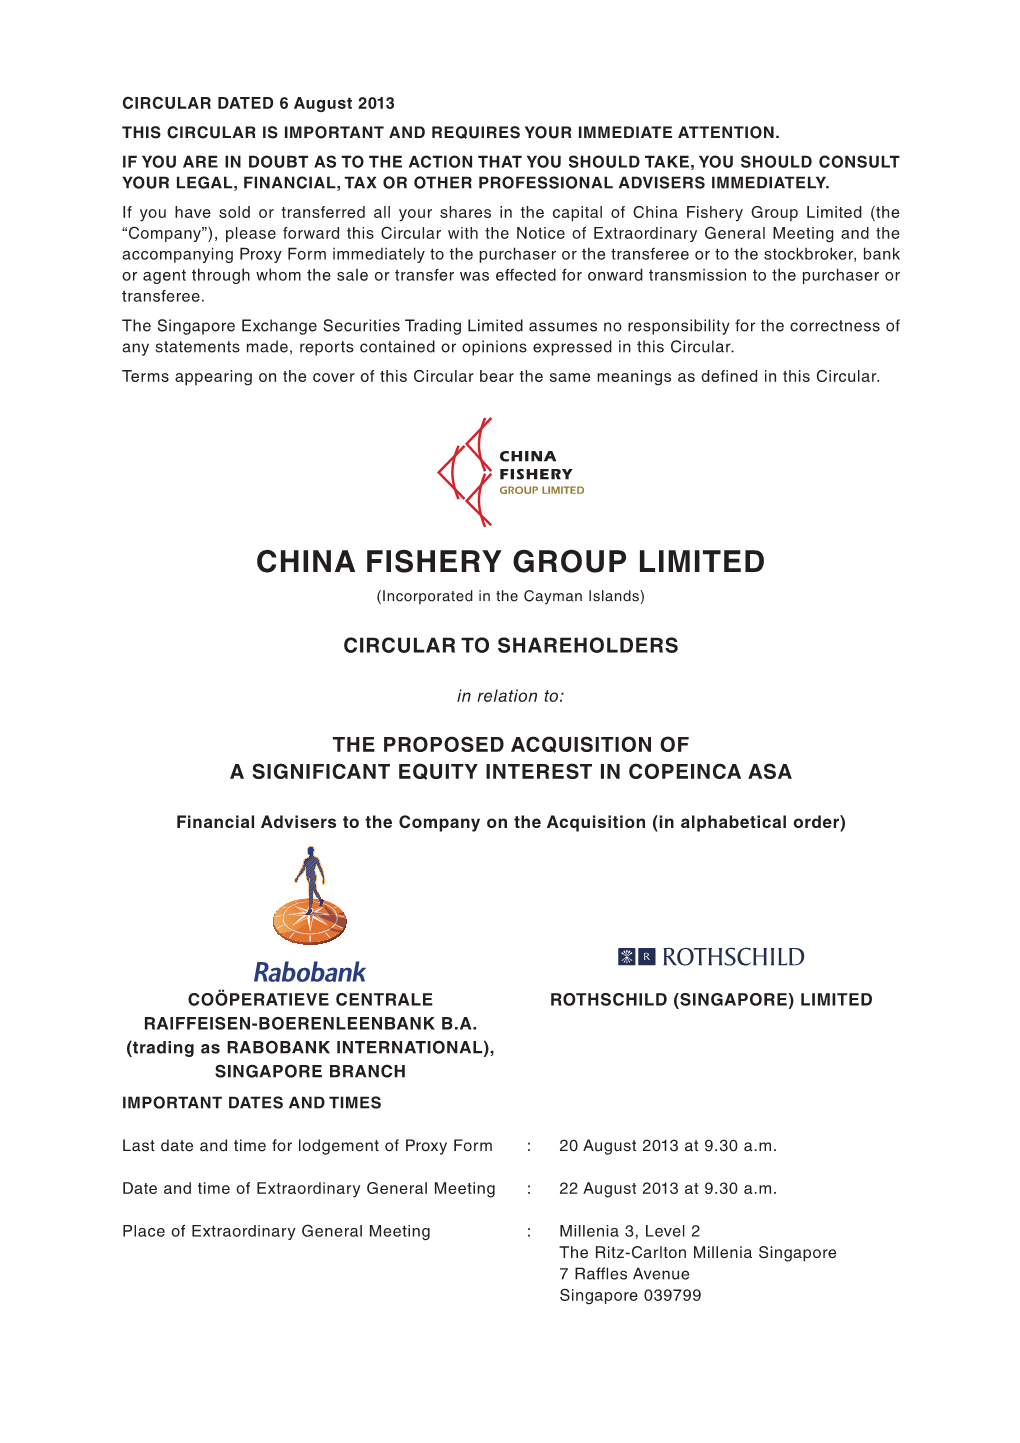 China Fishery Group Limited